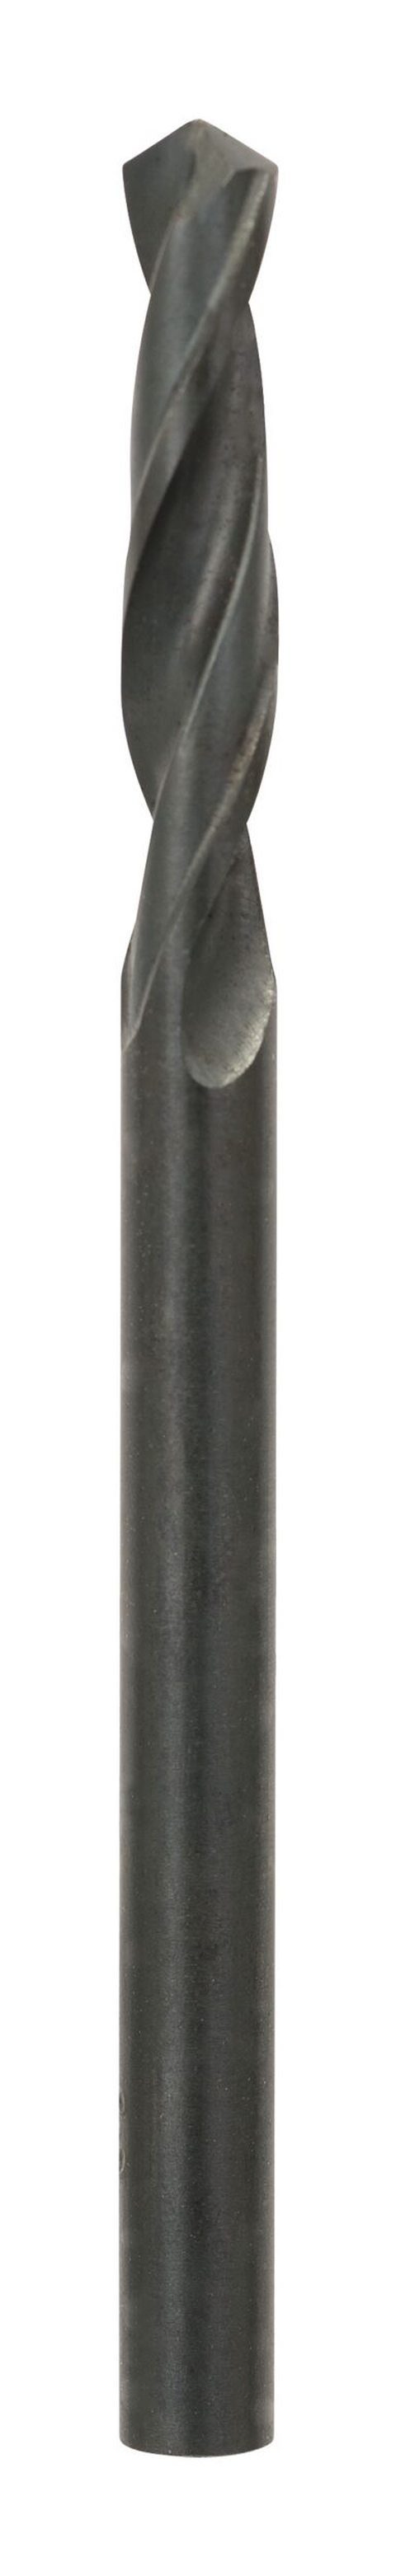 Metallbohrer, mm 3,8 22 (10 x - 55 Karosseriebohrer Stück), x 10er-Pack - 1897) HSS-R BOSCH (DIN